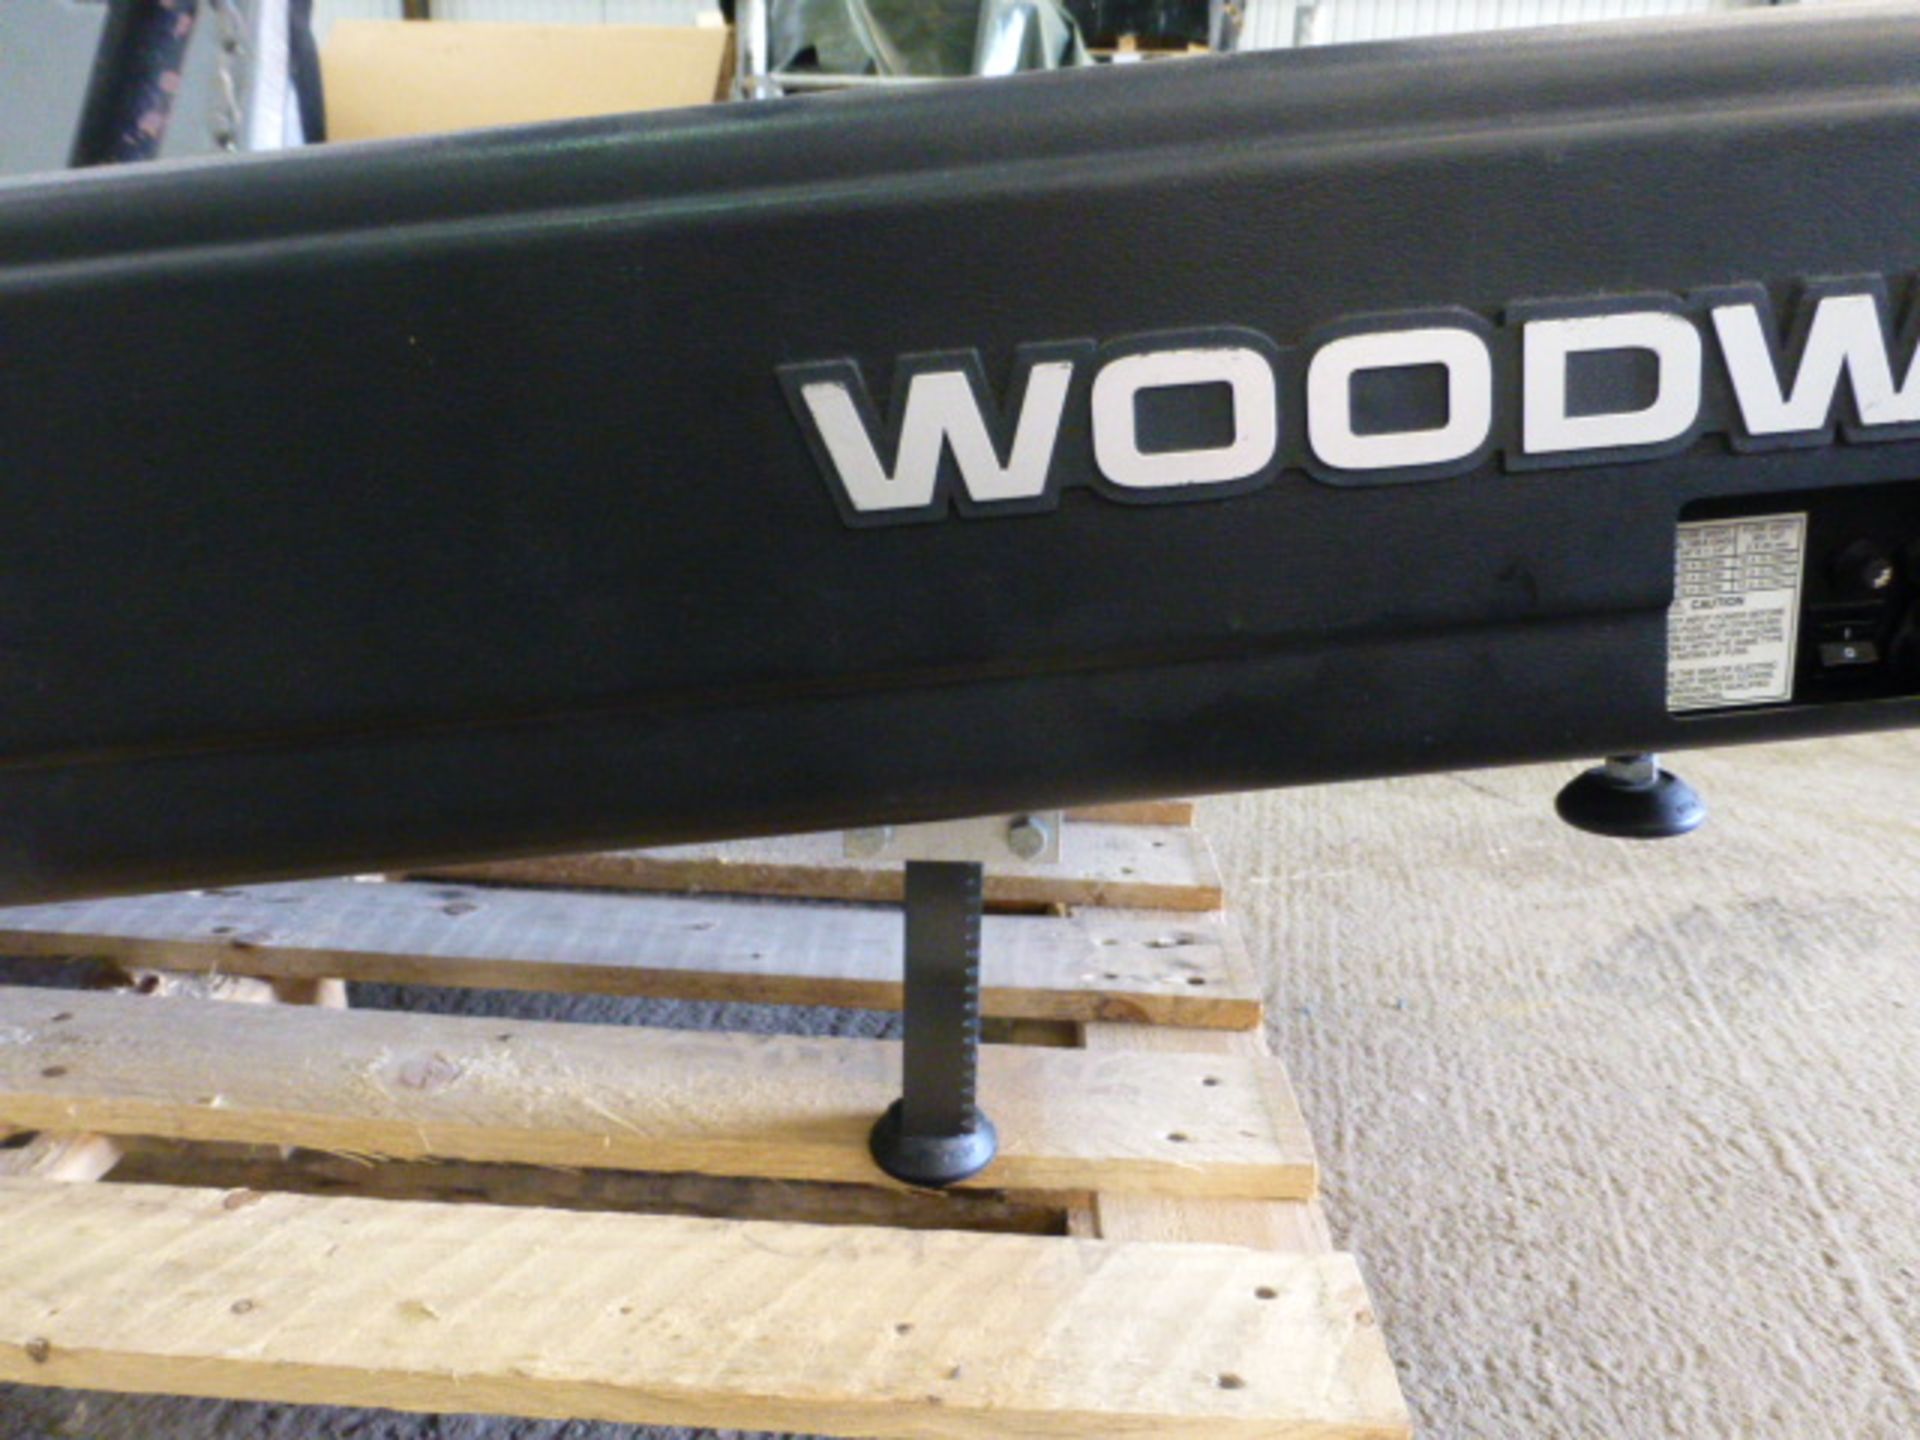 Woodway Mercury-S Treadmill - Image 9 of 12